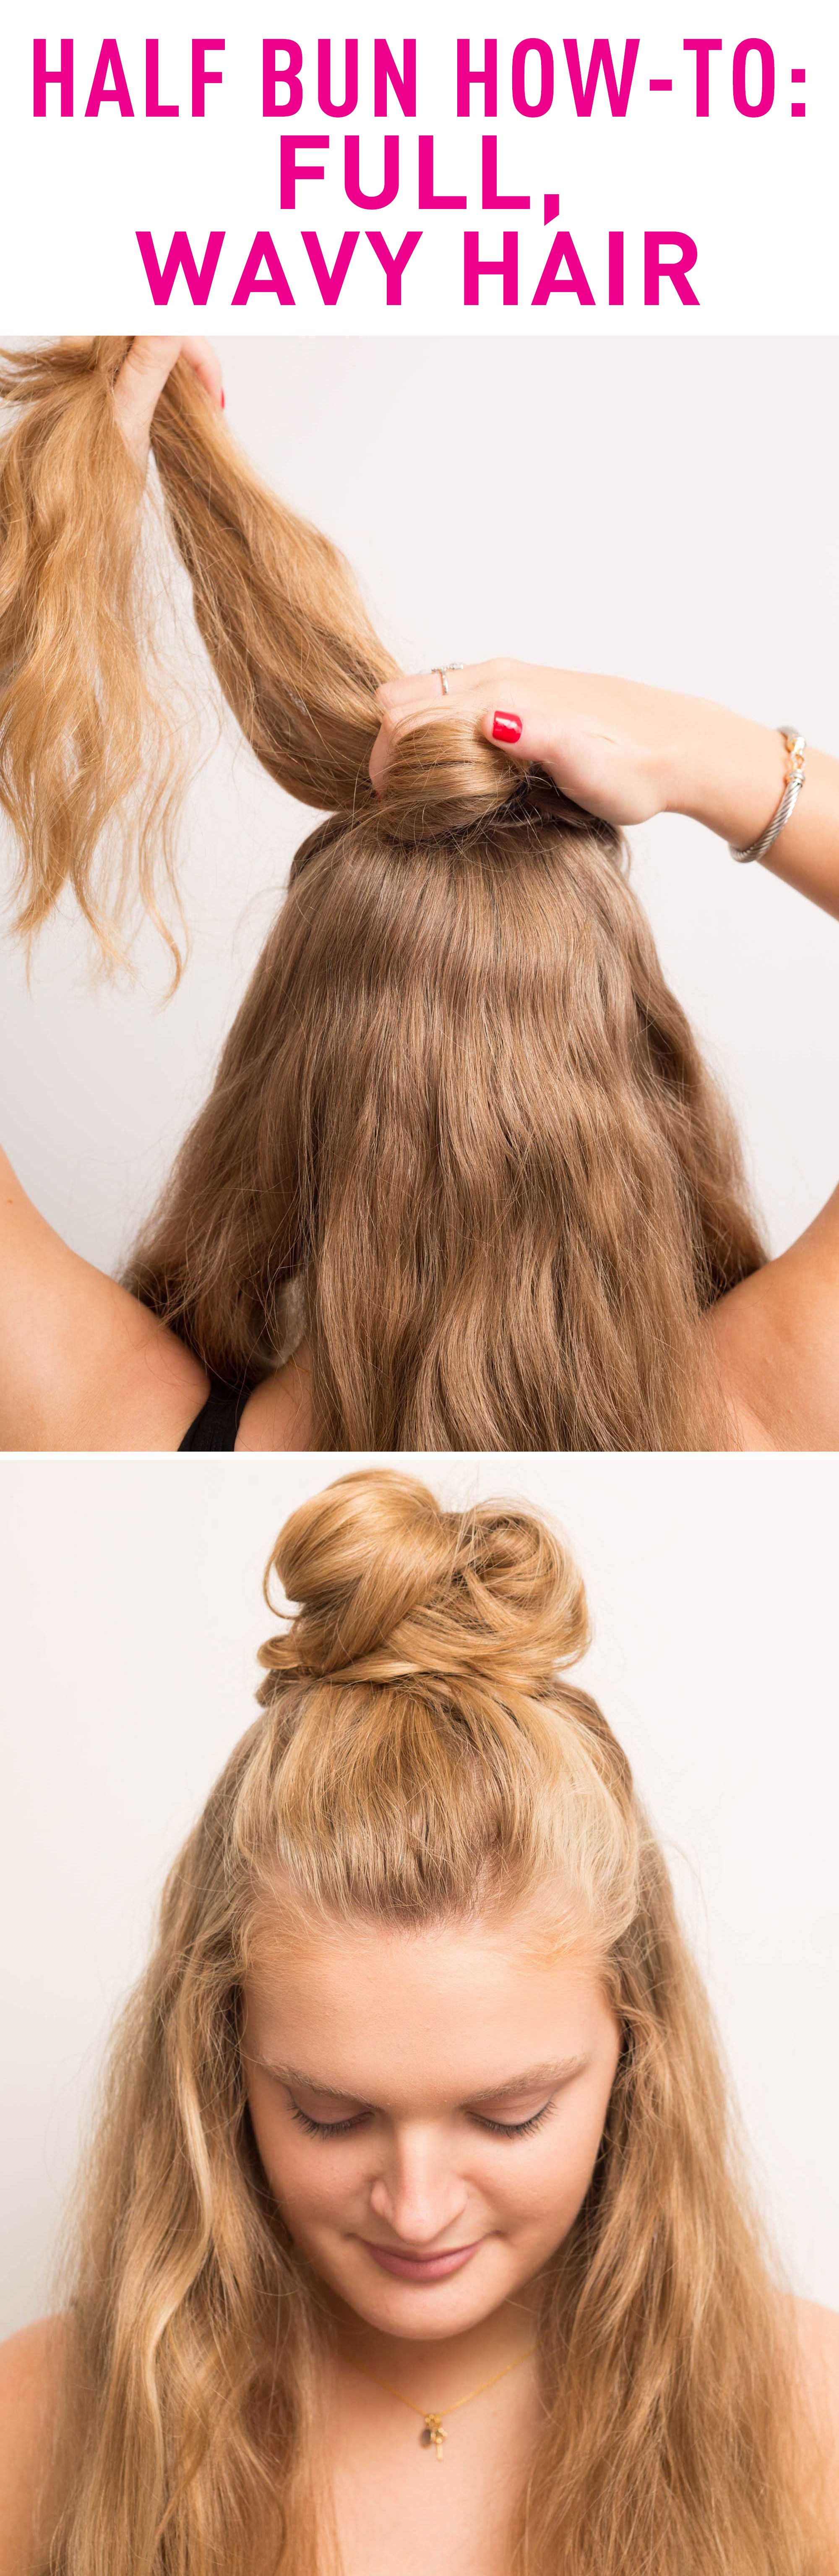 Amazon.com : Meatball Head Hair for Women, Magic Small Round Bun Head Hair  Maker for Long Hair : Beauty & Personal Care